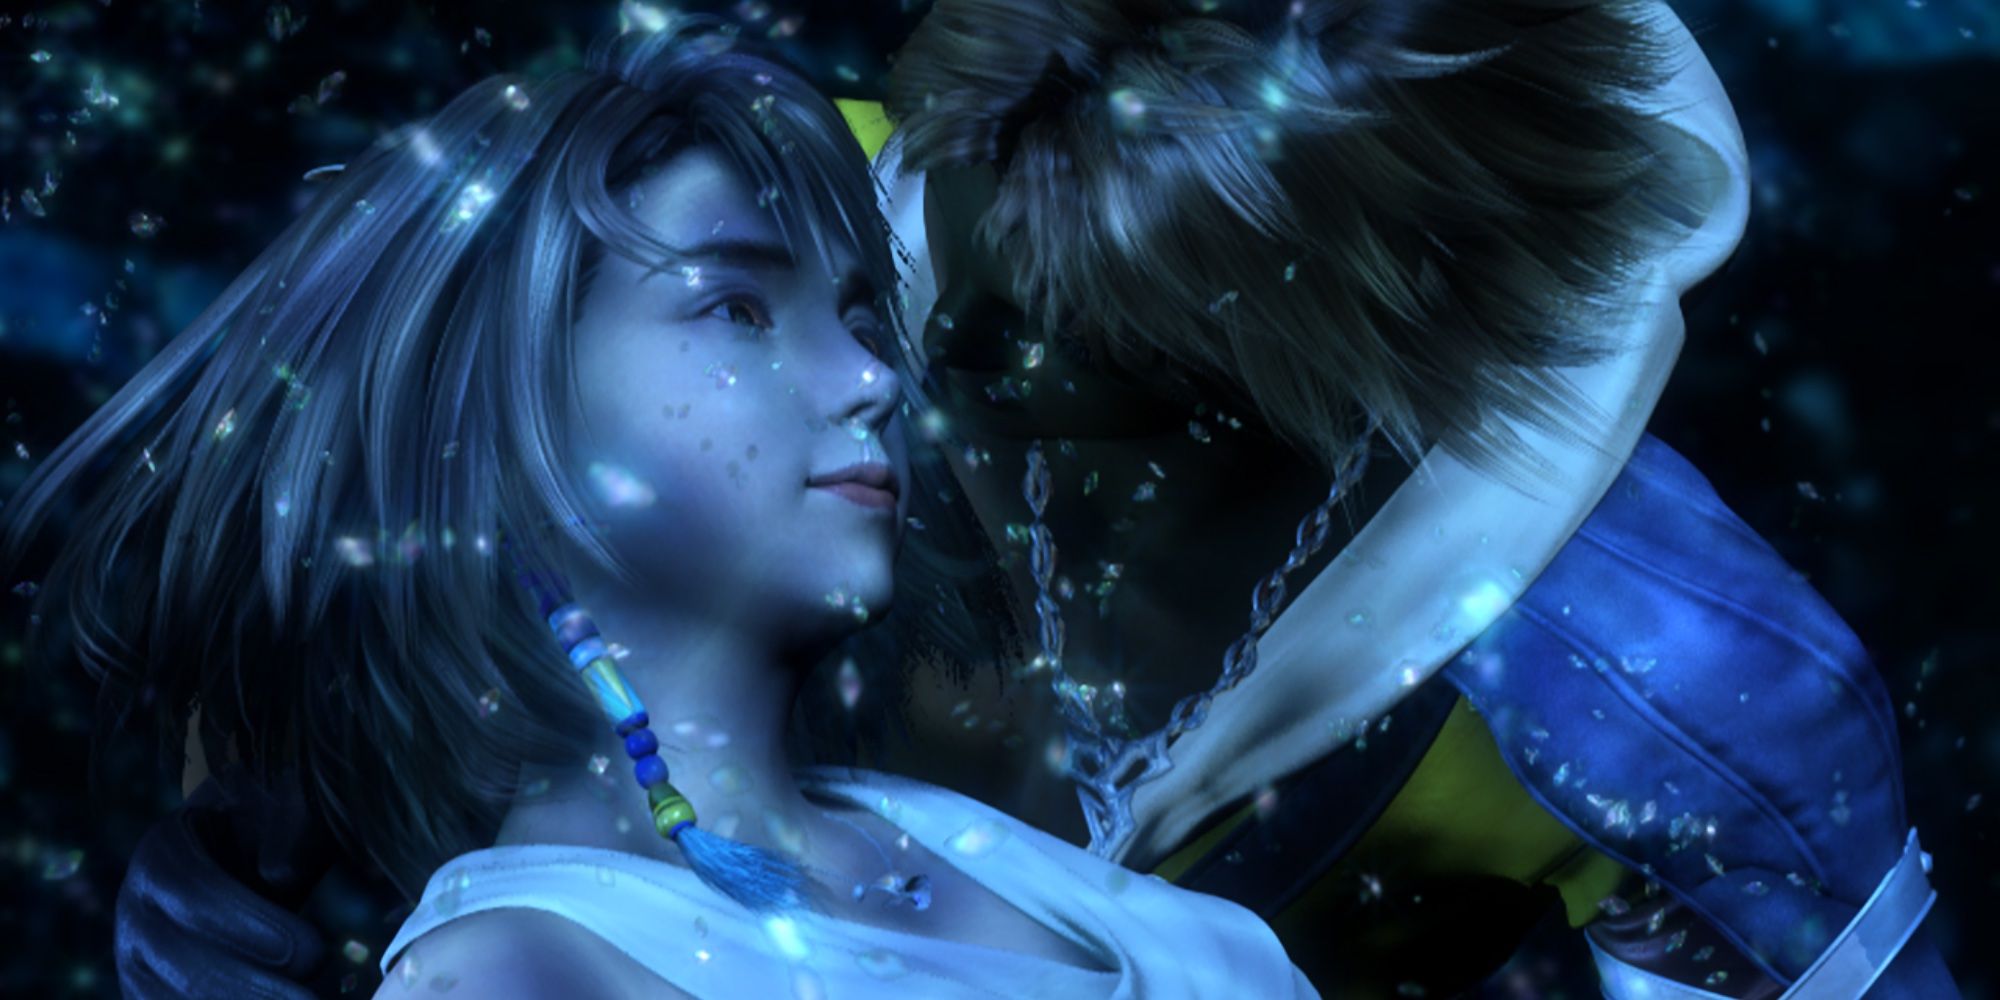 FINAL FANTASY X:X-2 HD Remaster: Yuna and Tidus embracing